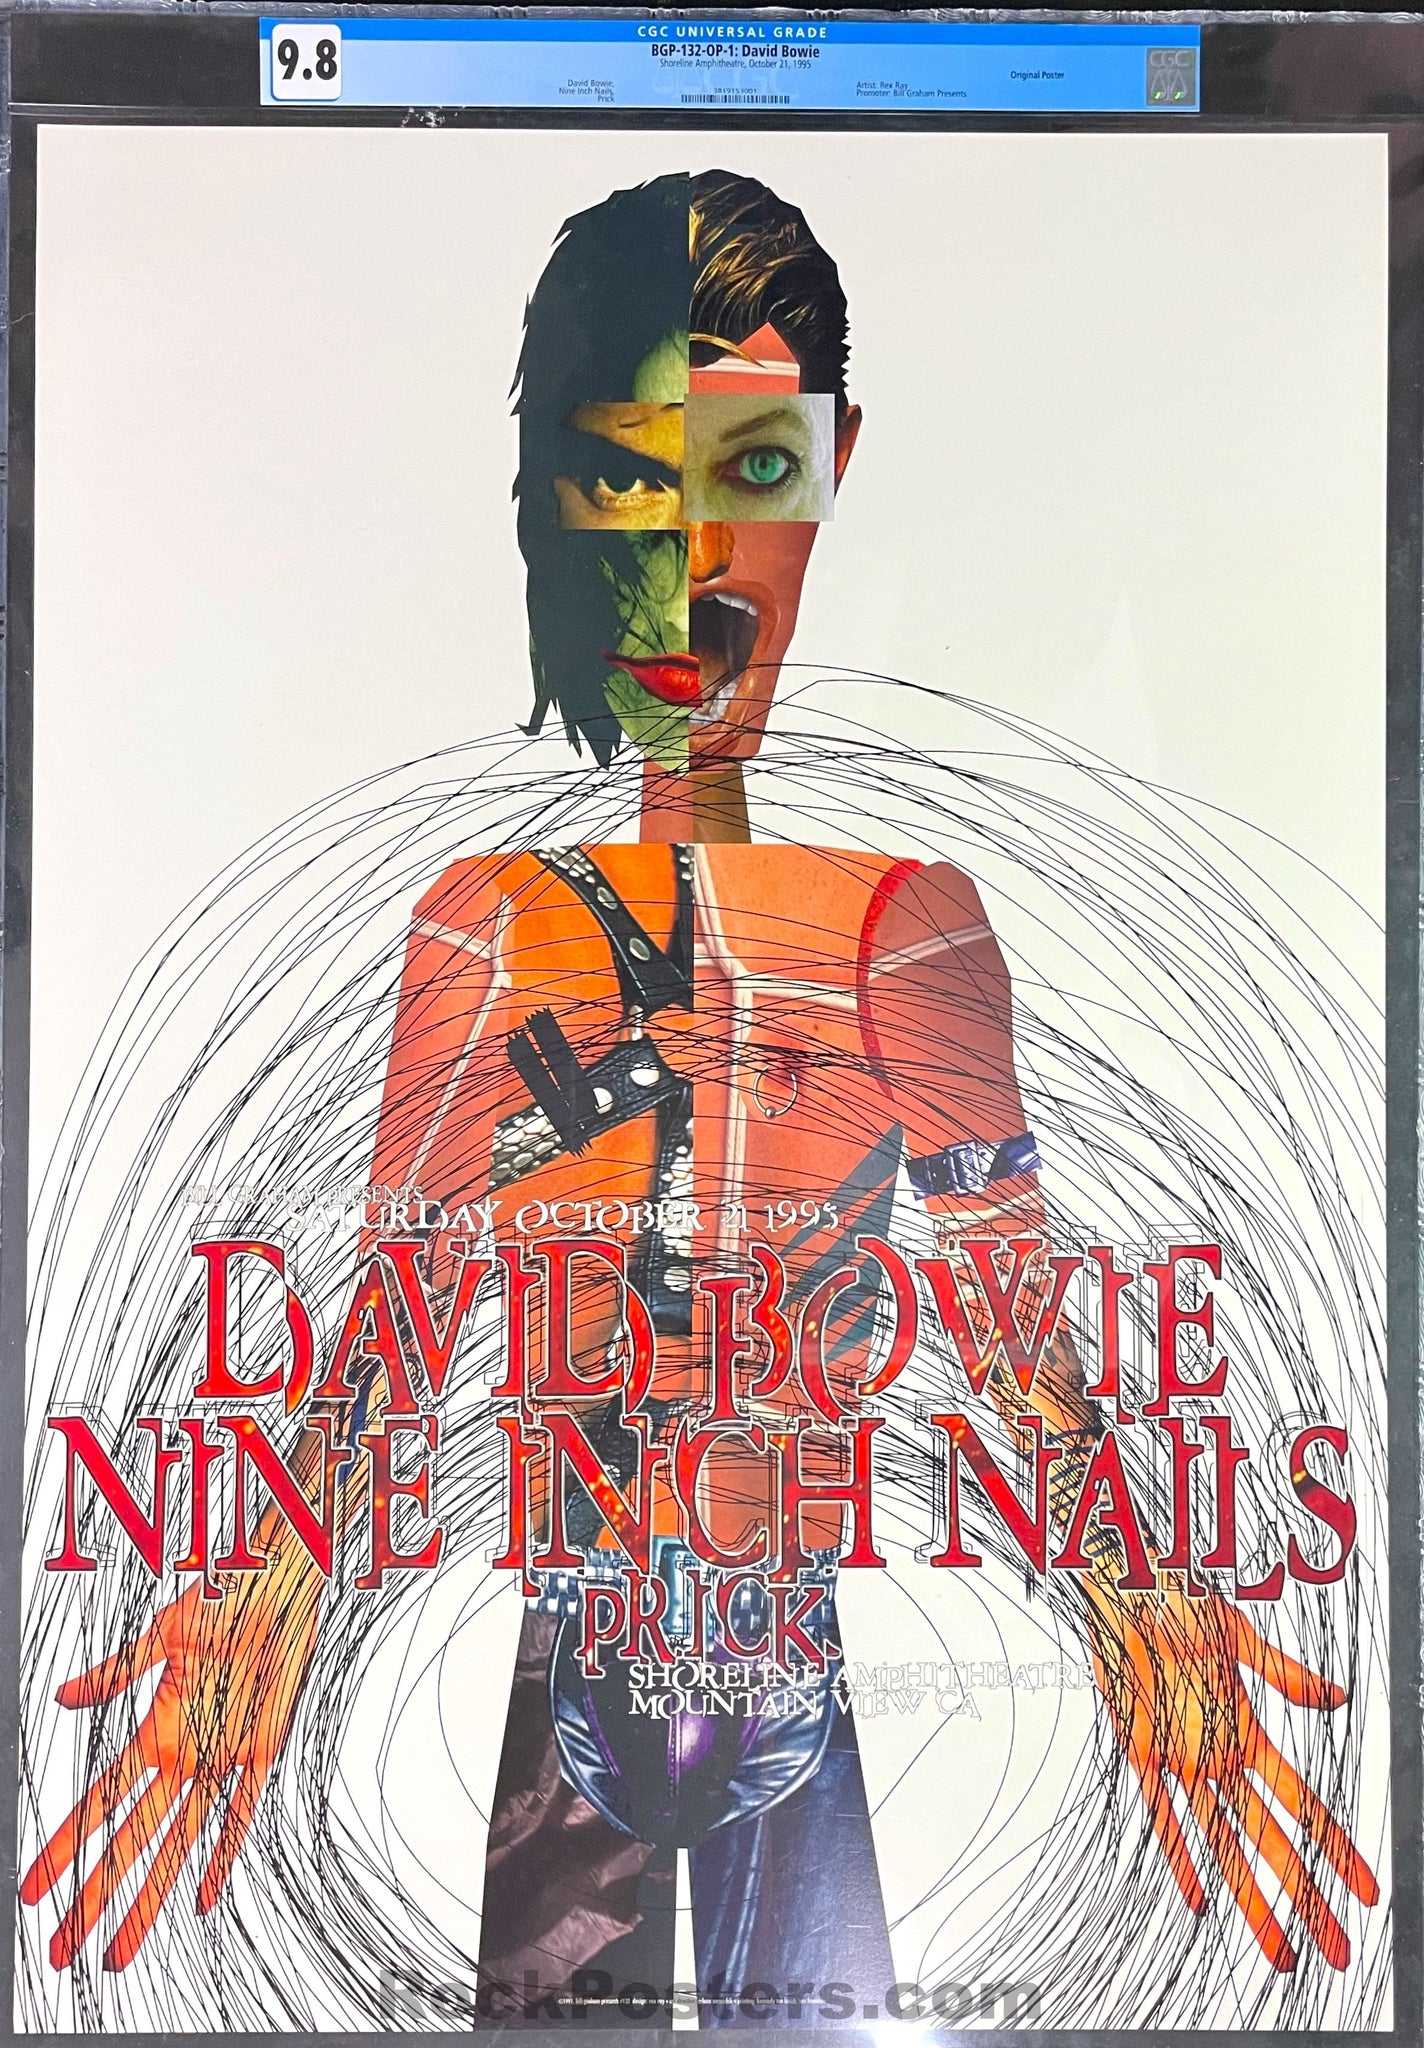 BGP-132 - David Bowie Nine Inch Nails - 1995 Poster - Shoreline Amphitheatre - CGC Graded 9.8